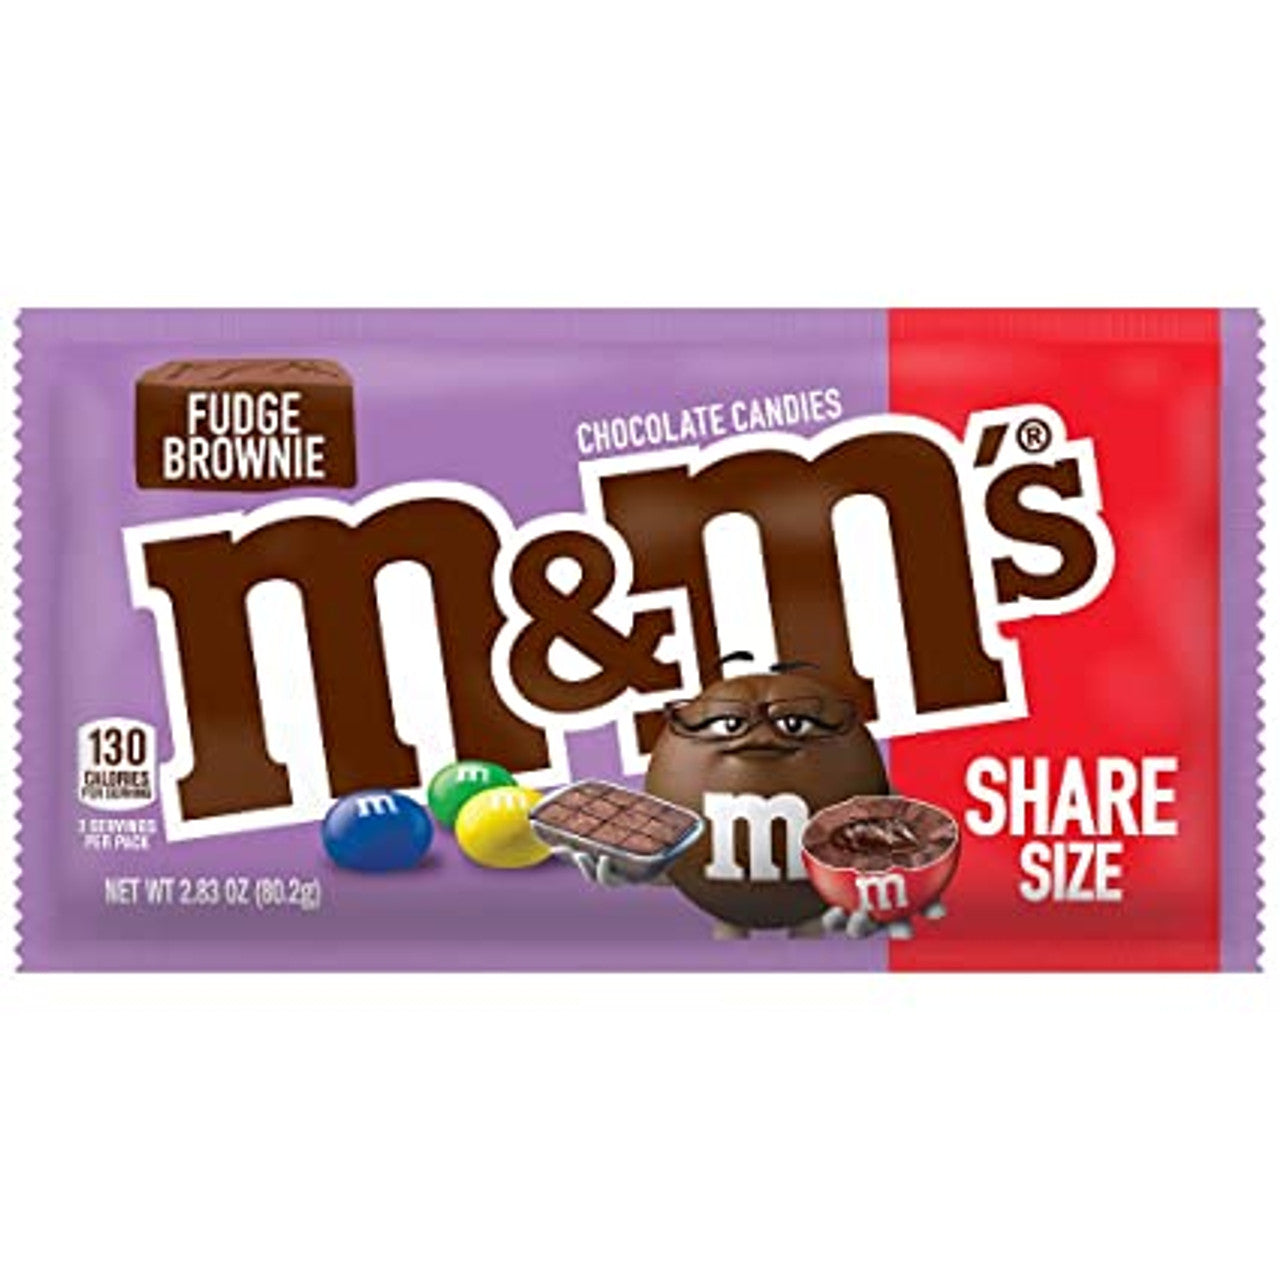 M&M’s Fudge Brownie Chocolate Candies Share Size (80.2g)